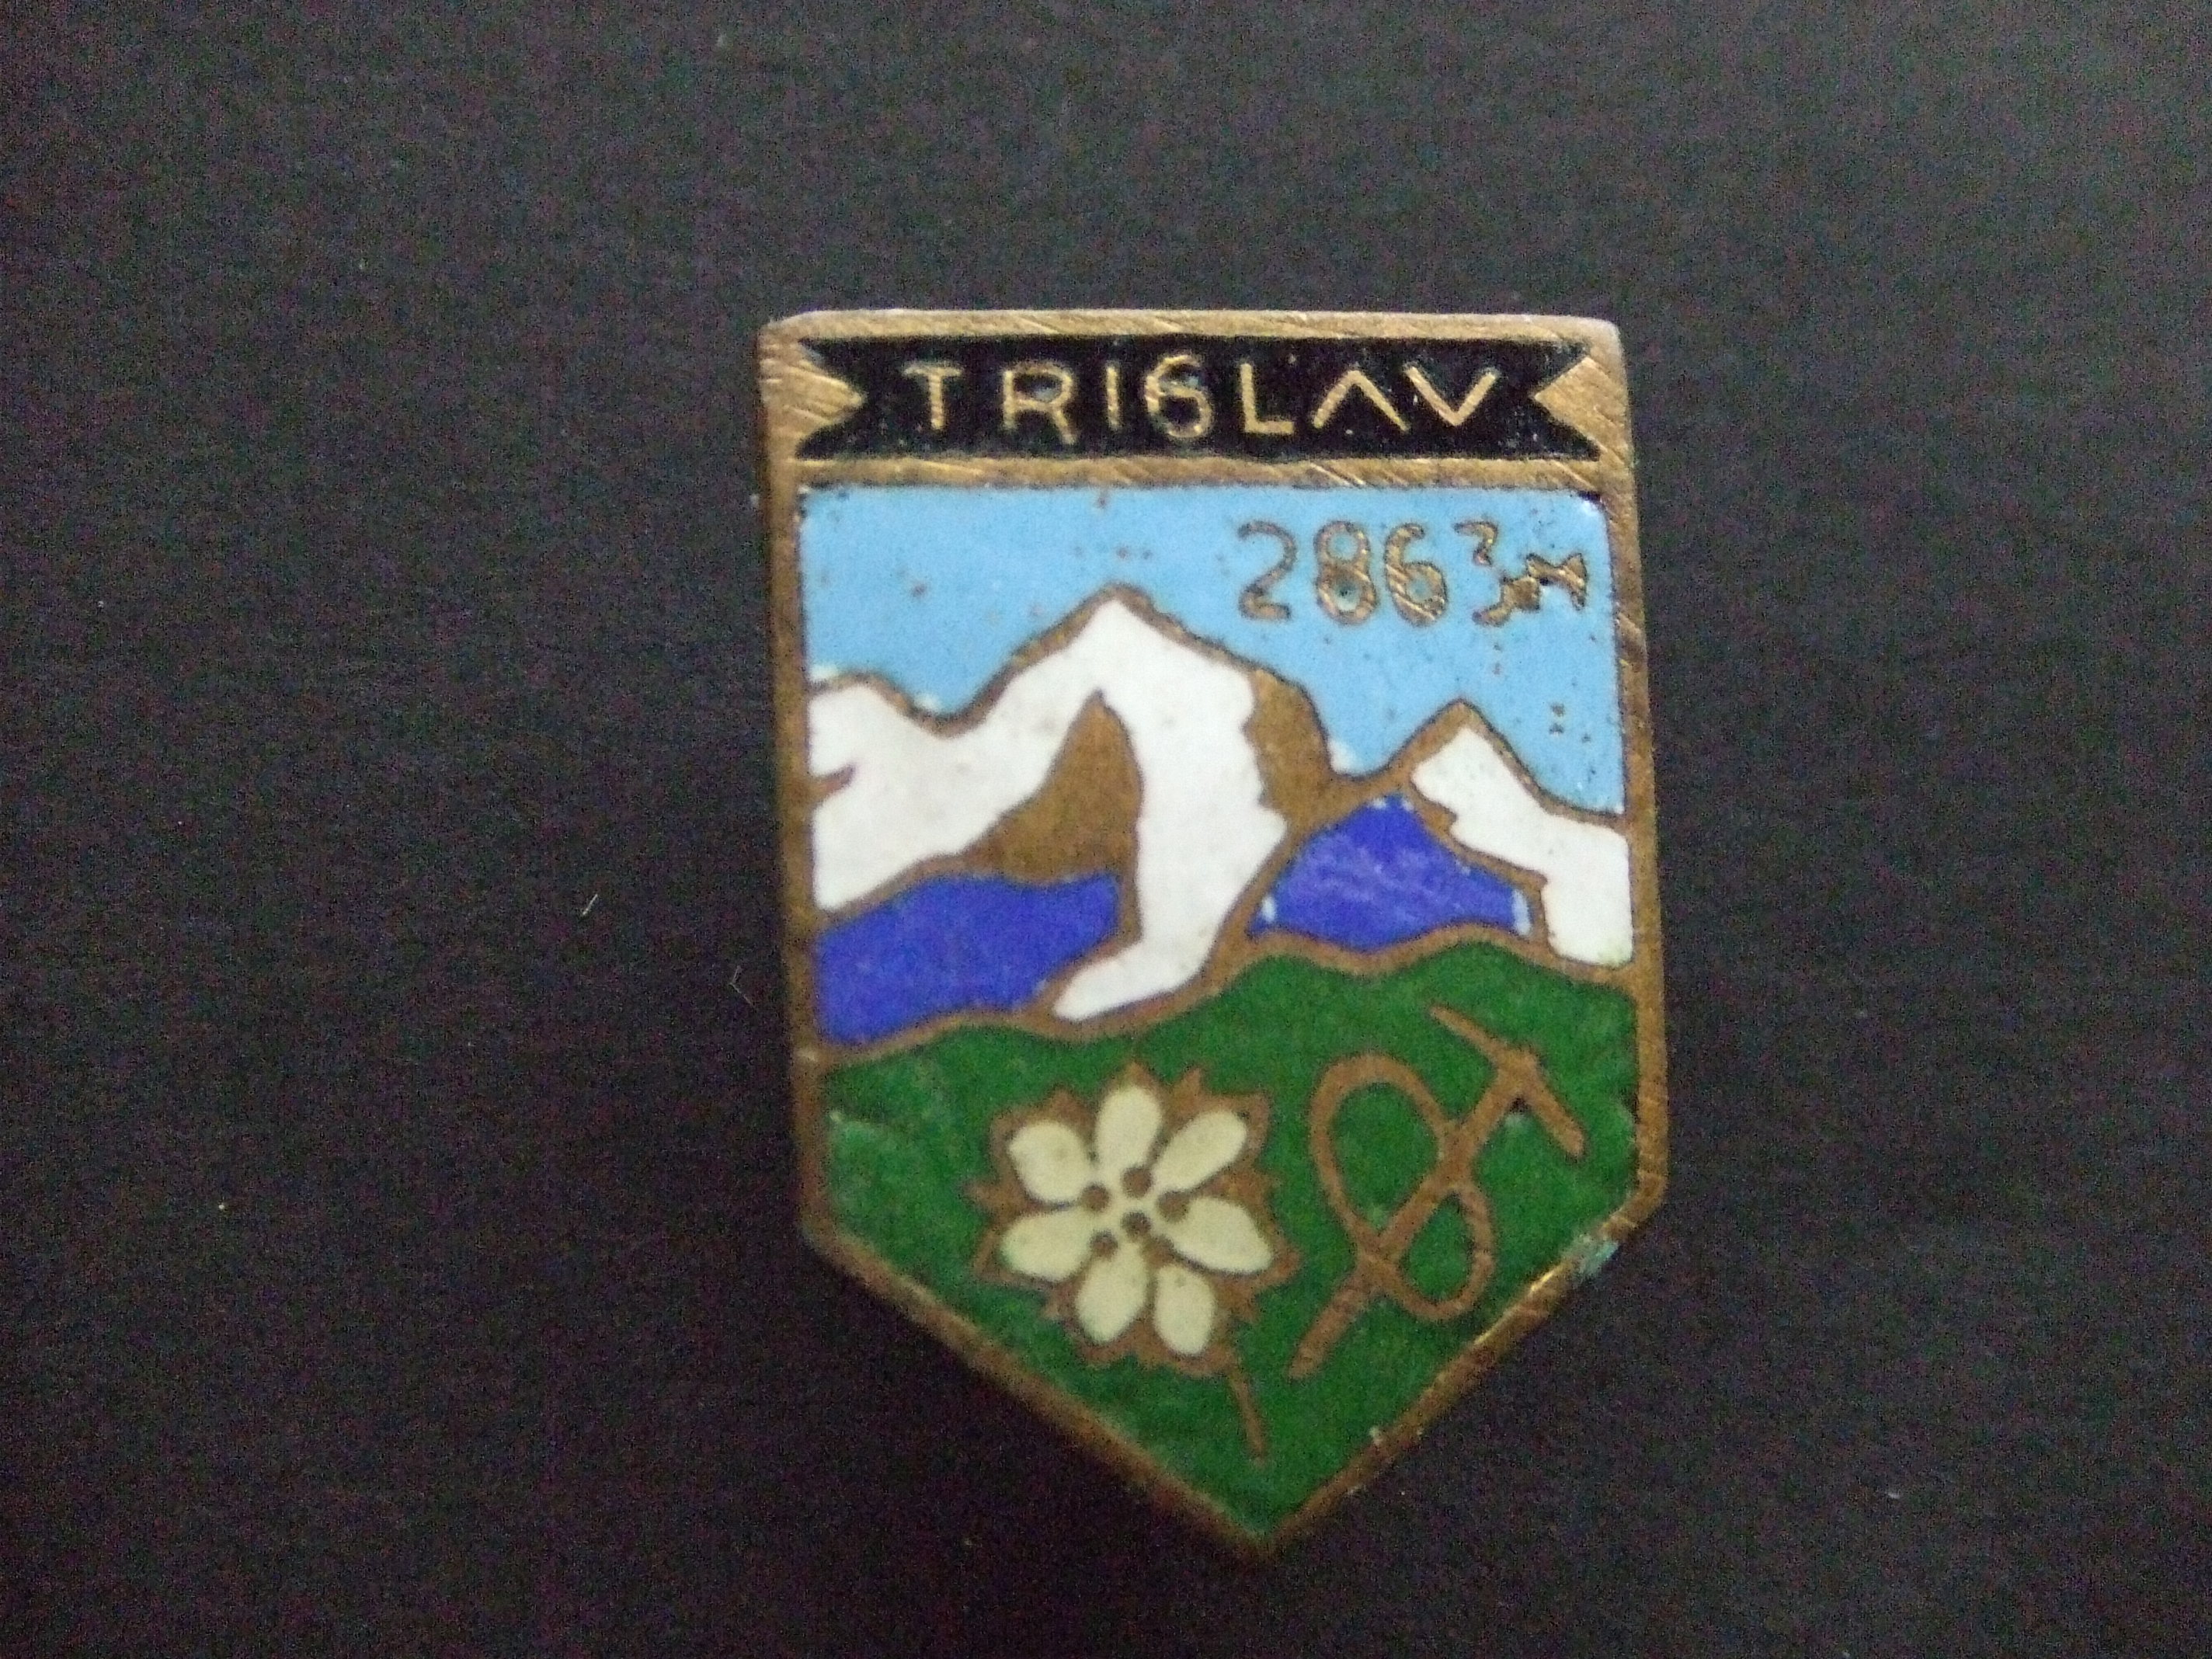 Triglav Nationaal Park Julische Alpen Slovenië